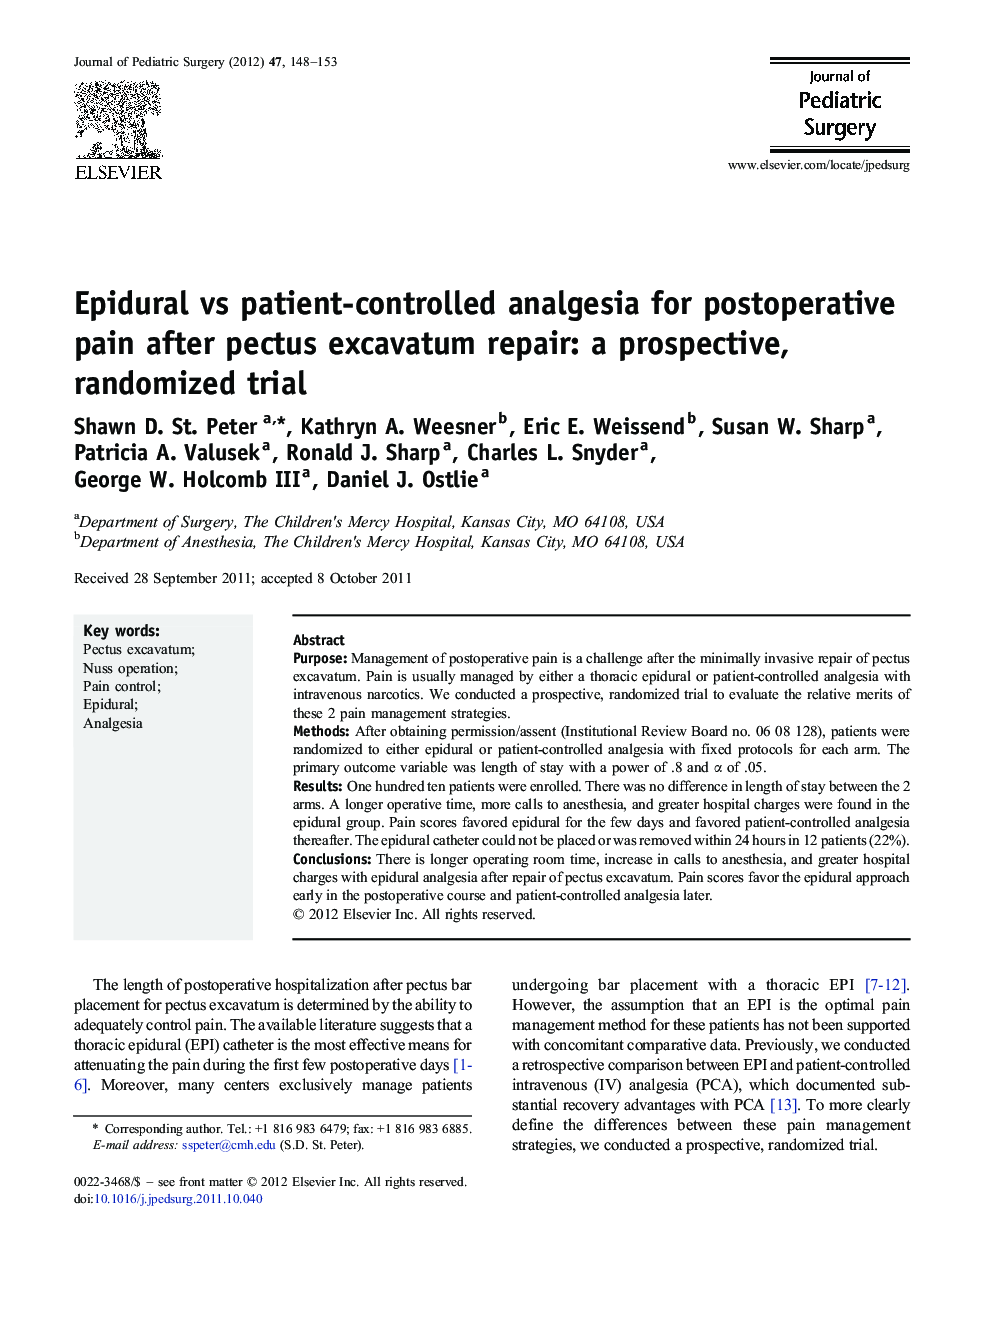 Epidural vs patient-controlled analgesia for postoperative pain after pectus excavatum repair: a prospective, randomized trial